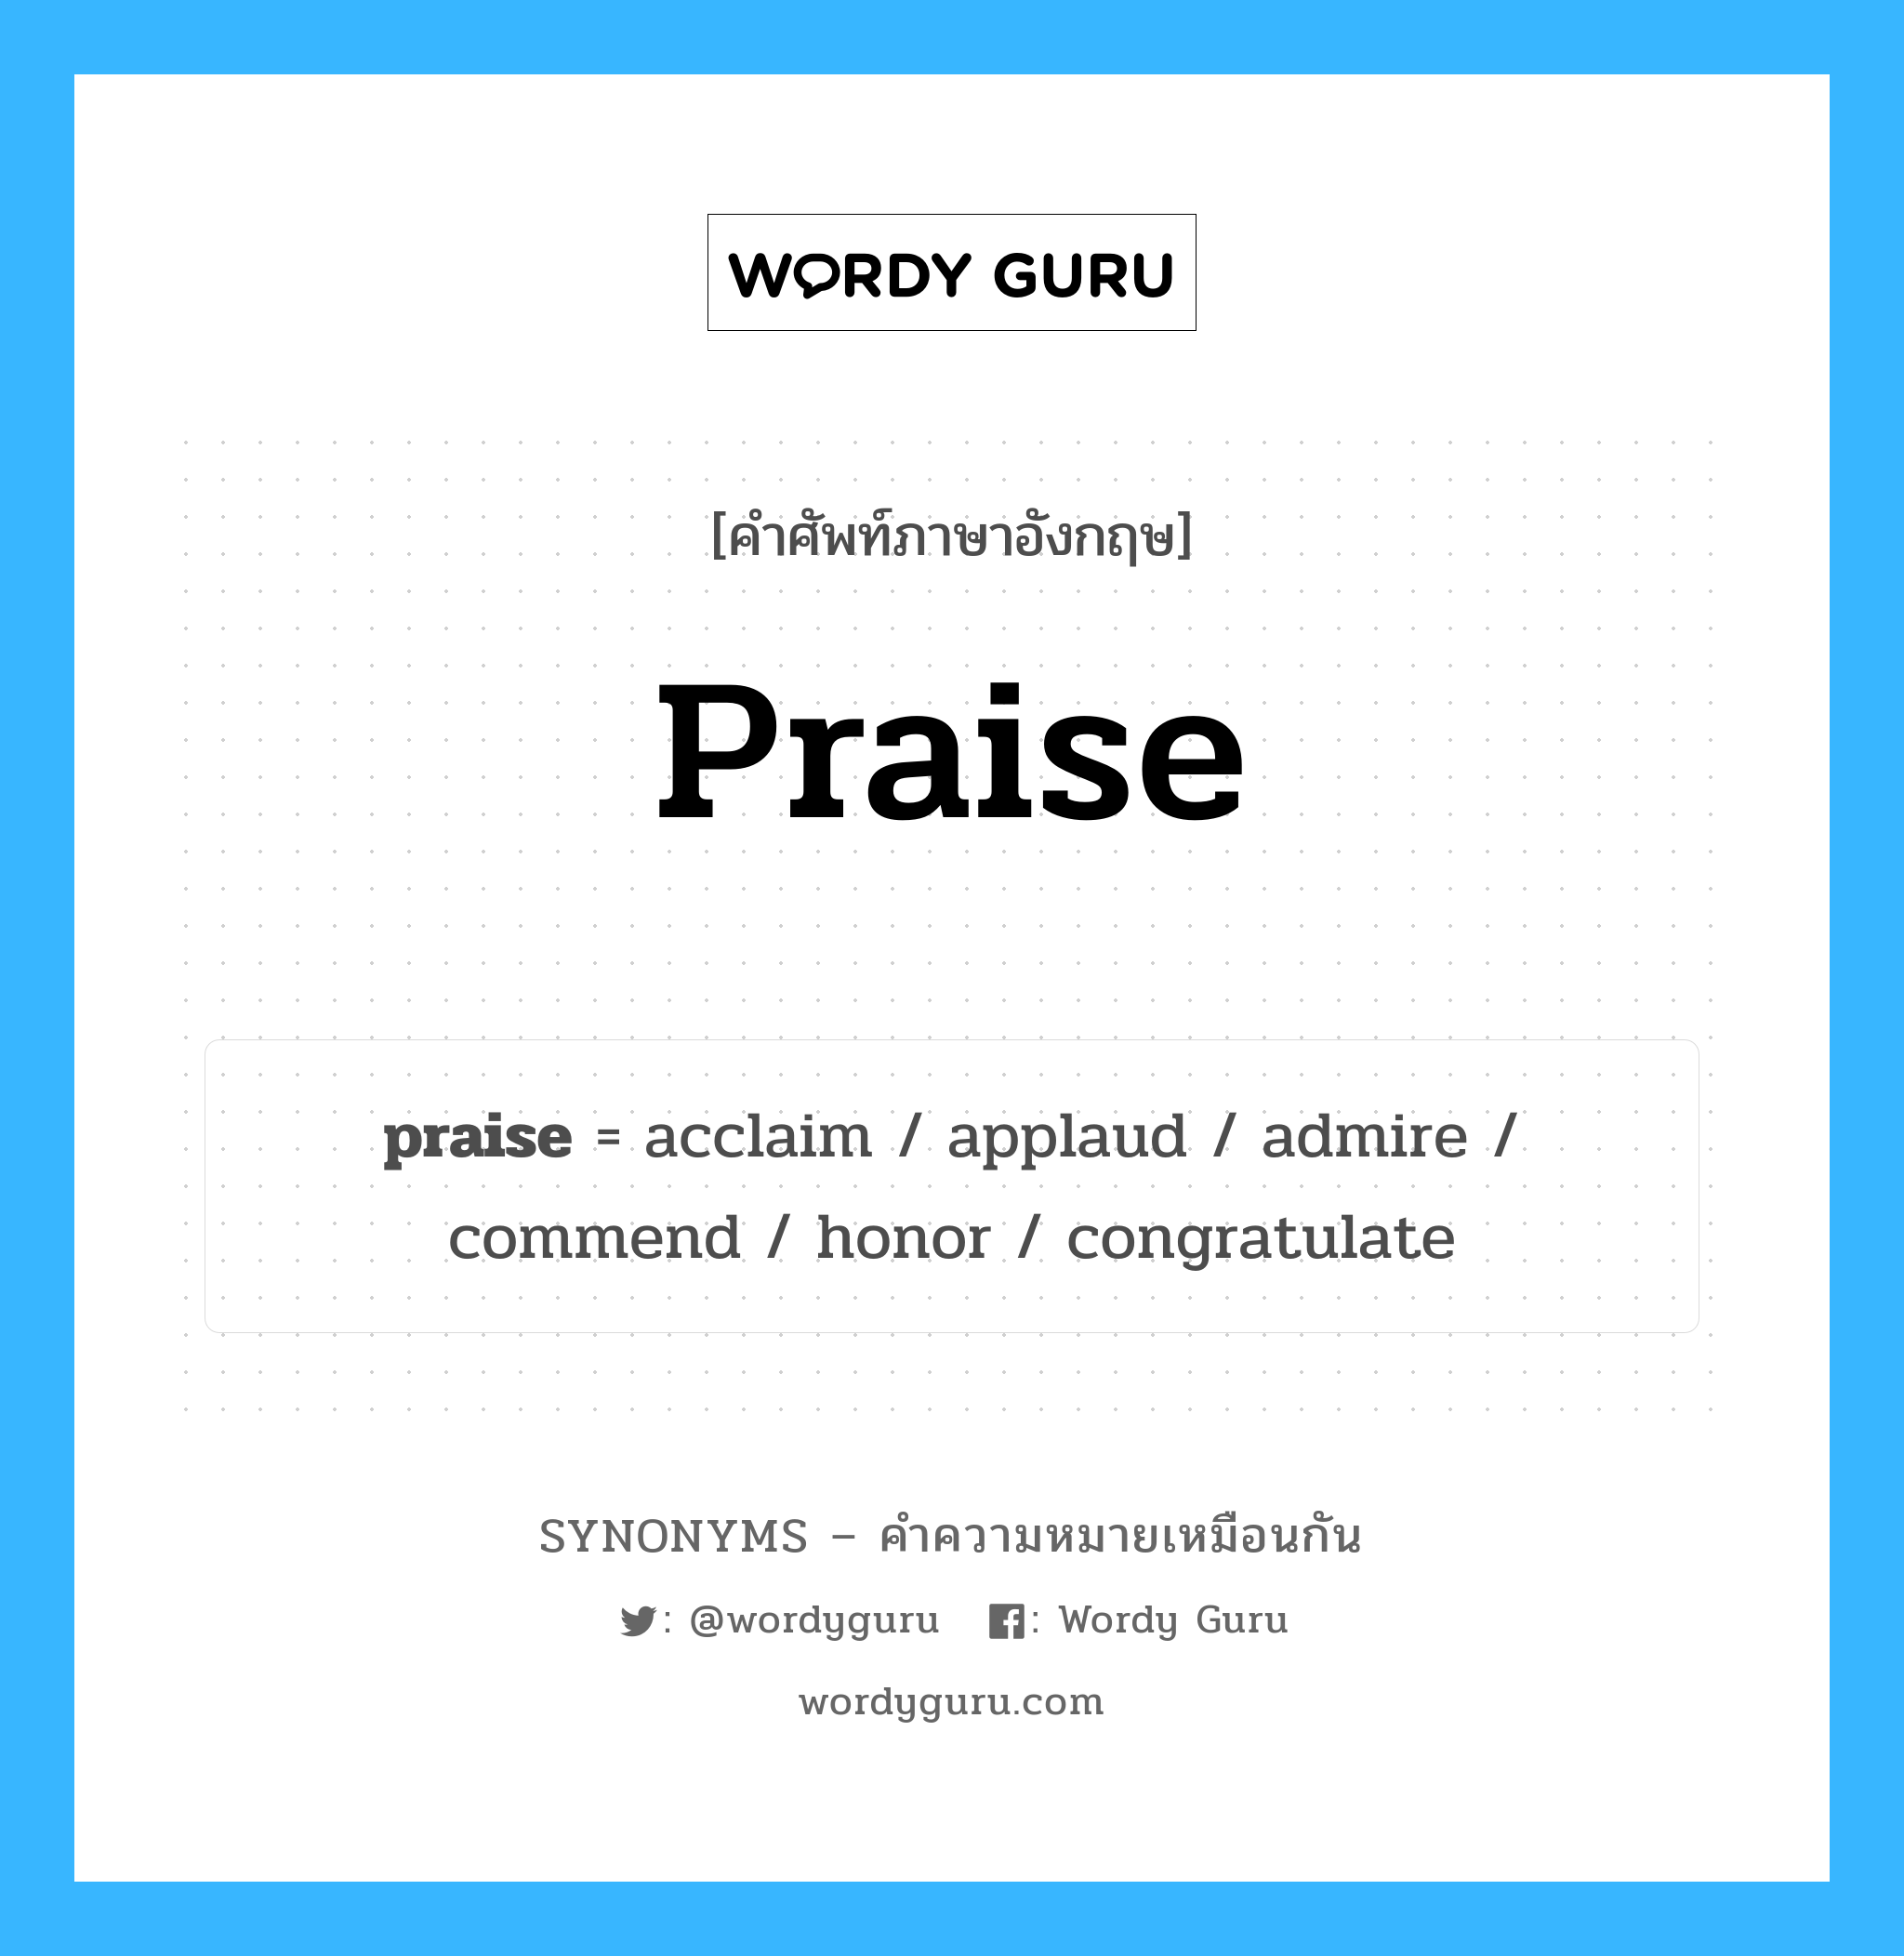 commend เป็นหนึ่งใน praise และมีคำอื่น ๆ อีกดังนี้, คำศัพท์ภาษาอังกฤษ commend ความหมายคล้ายกันกับ praise แปลว่า ยกย่อง หมวด praise